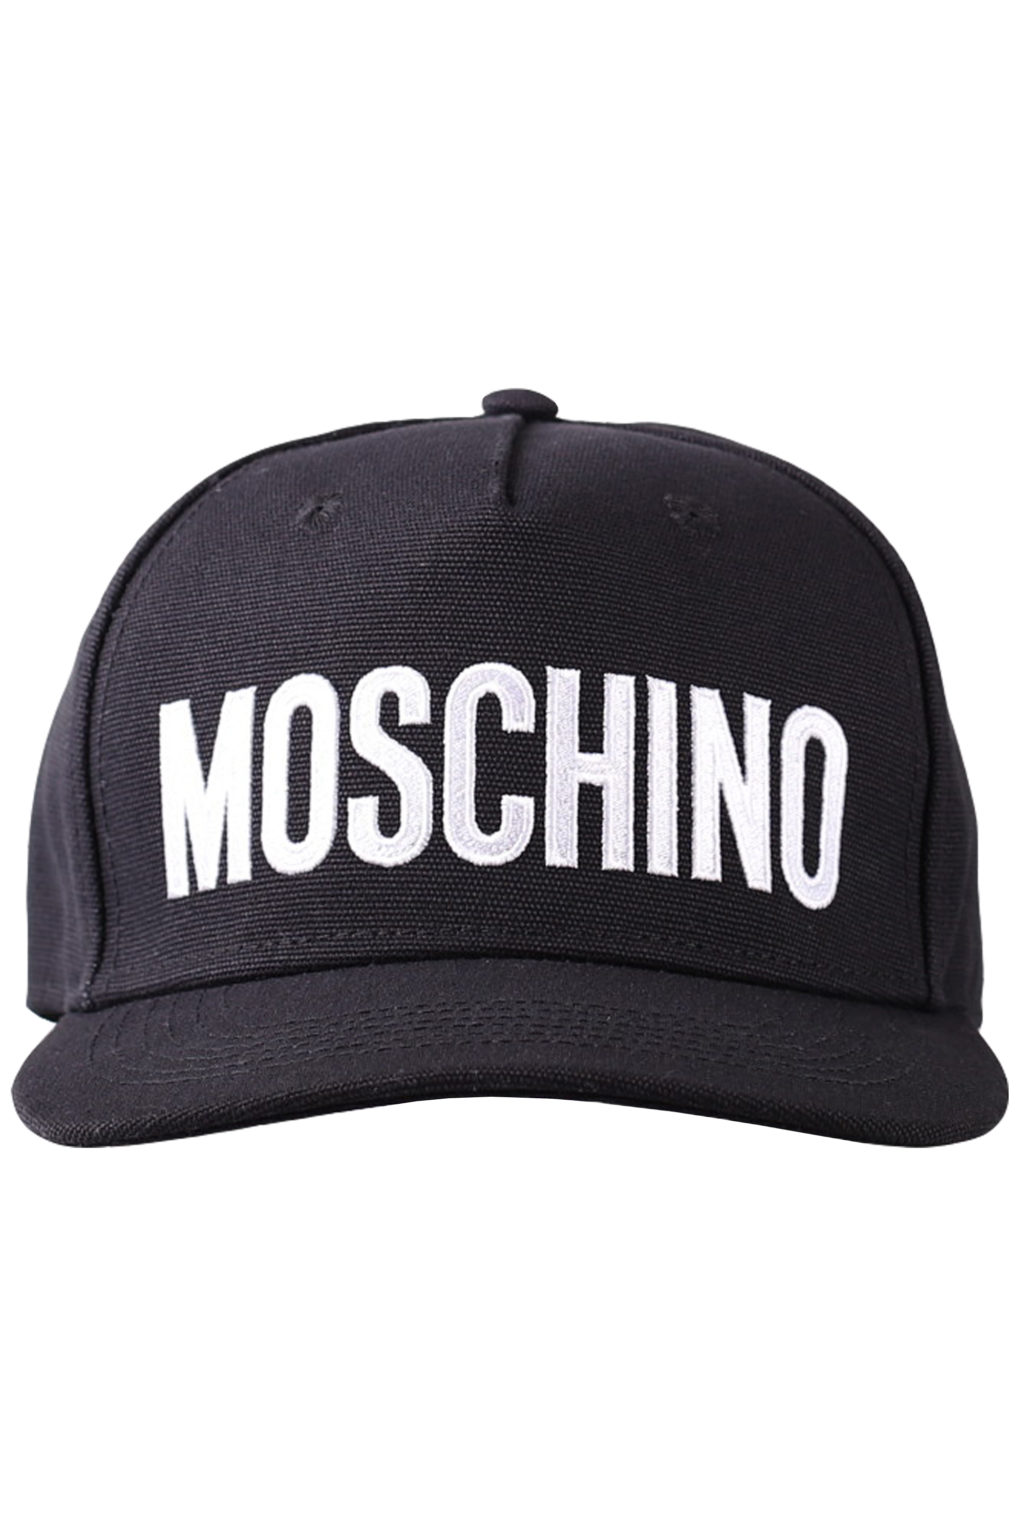 Moschino - Gorra negra con logo grande bordado blanco - BLS Fashion